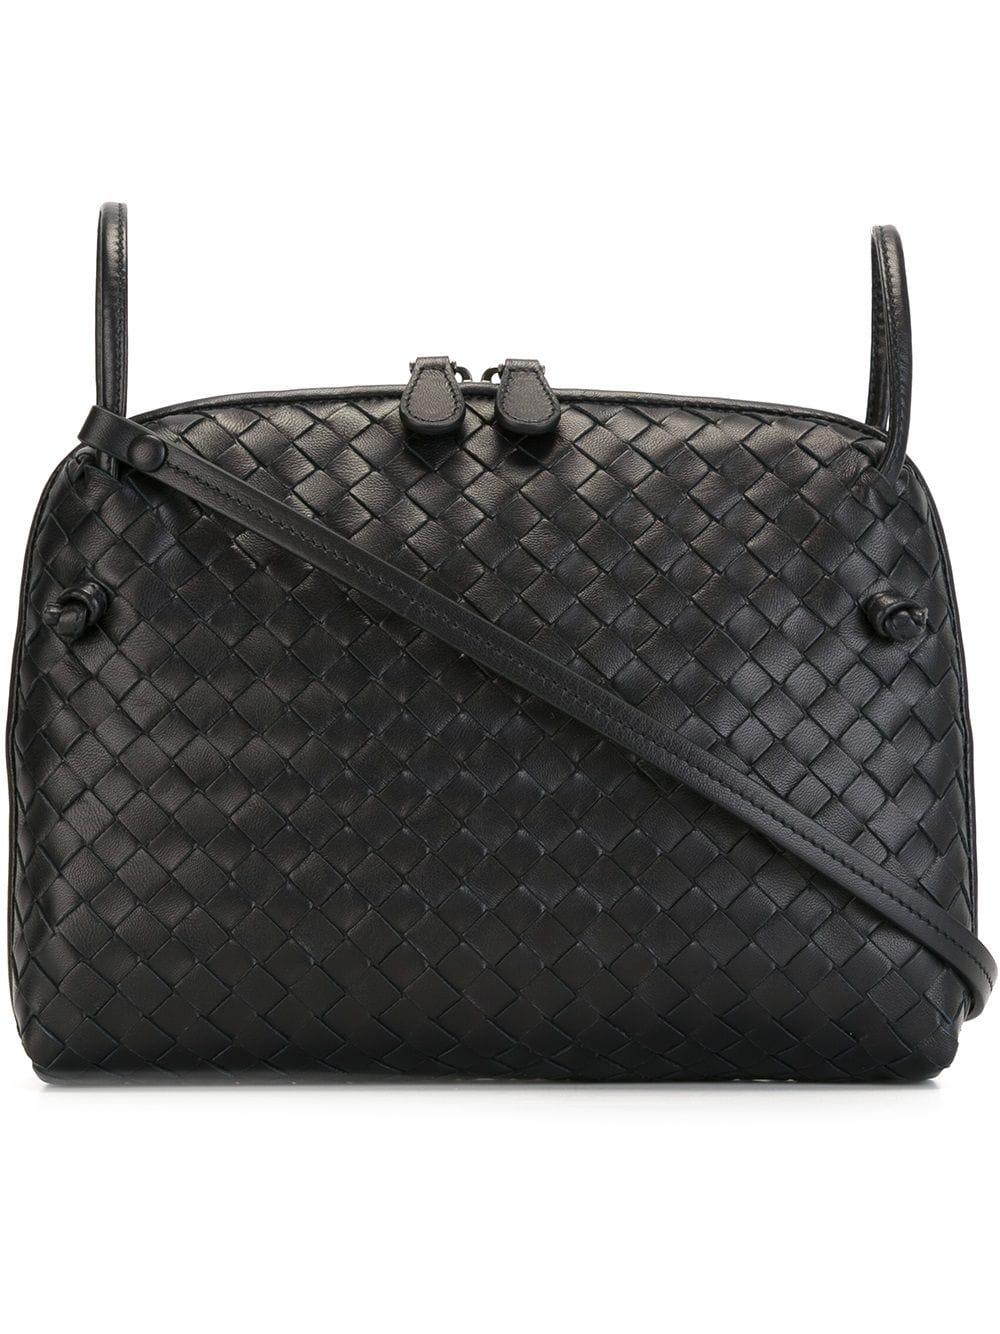 Bottega Veneta Nodini Intrecciato Leather Crossbody Bag on SALE